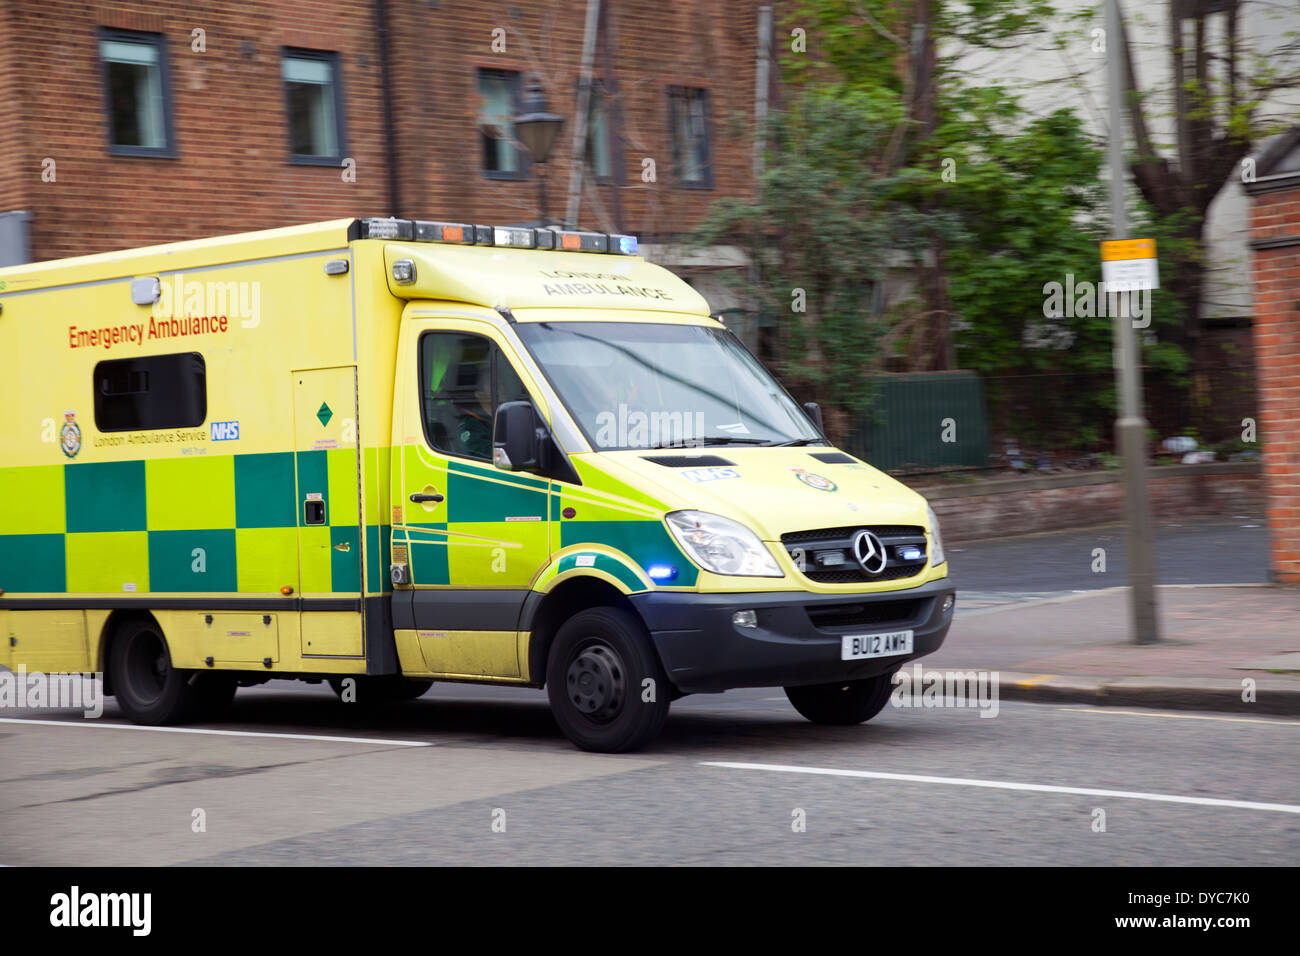 Moving Ambulance on St John's Hill in SW11 - London UK Stock Photo